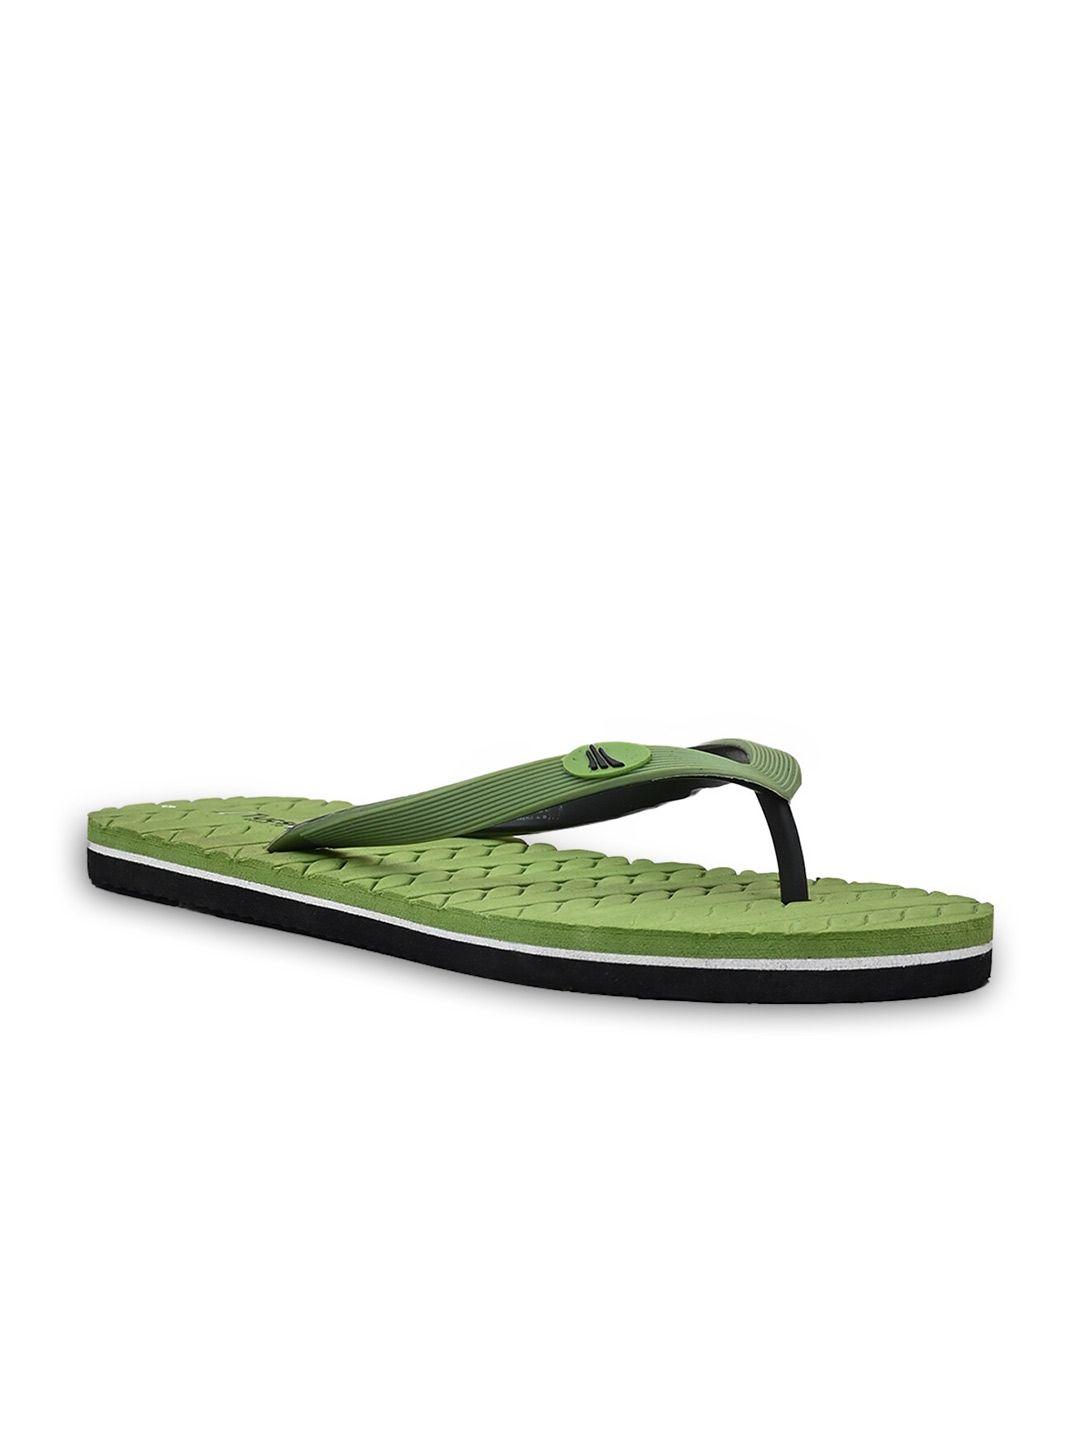 tucson women olive green & black rubber slip-on flip flop